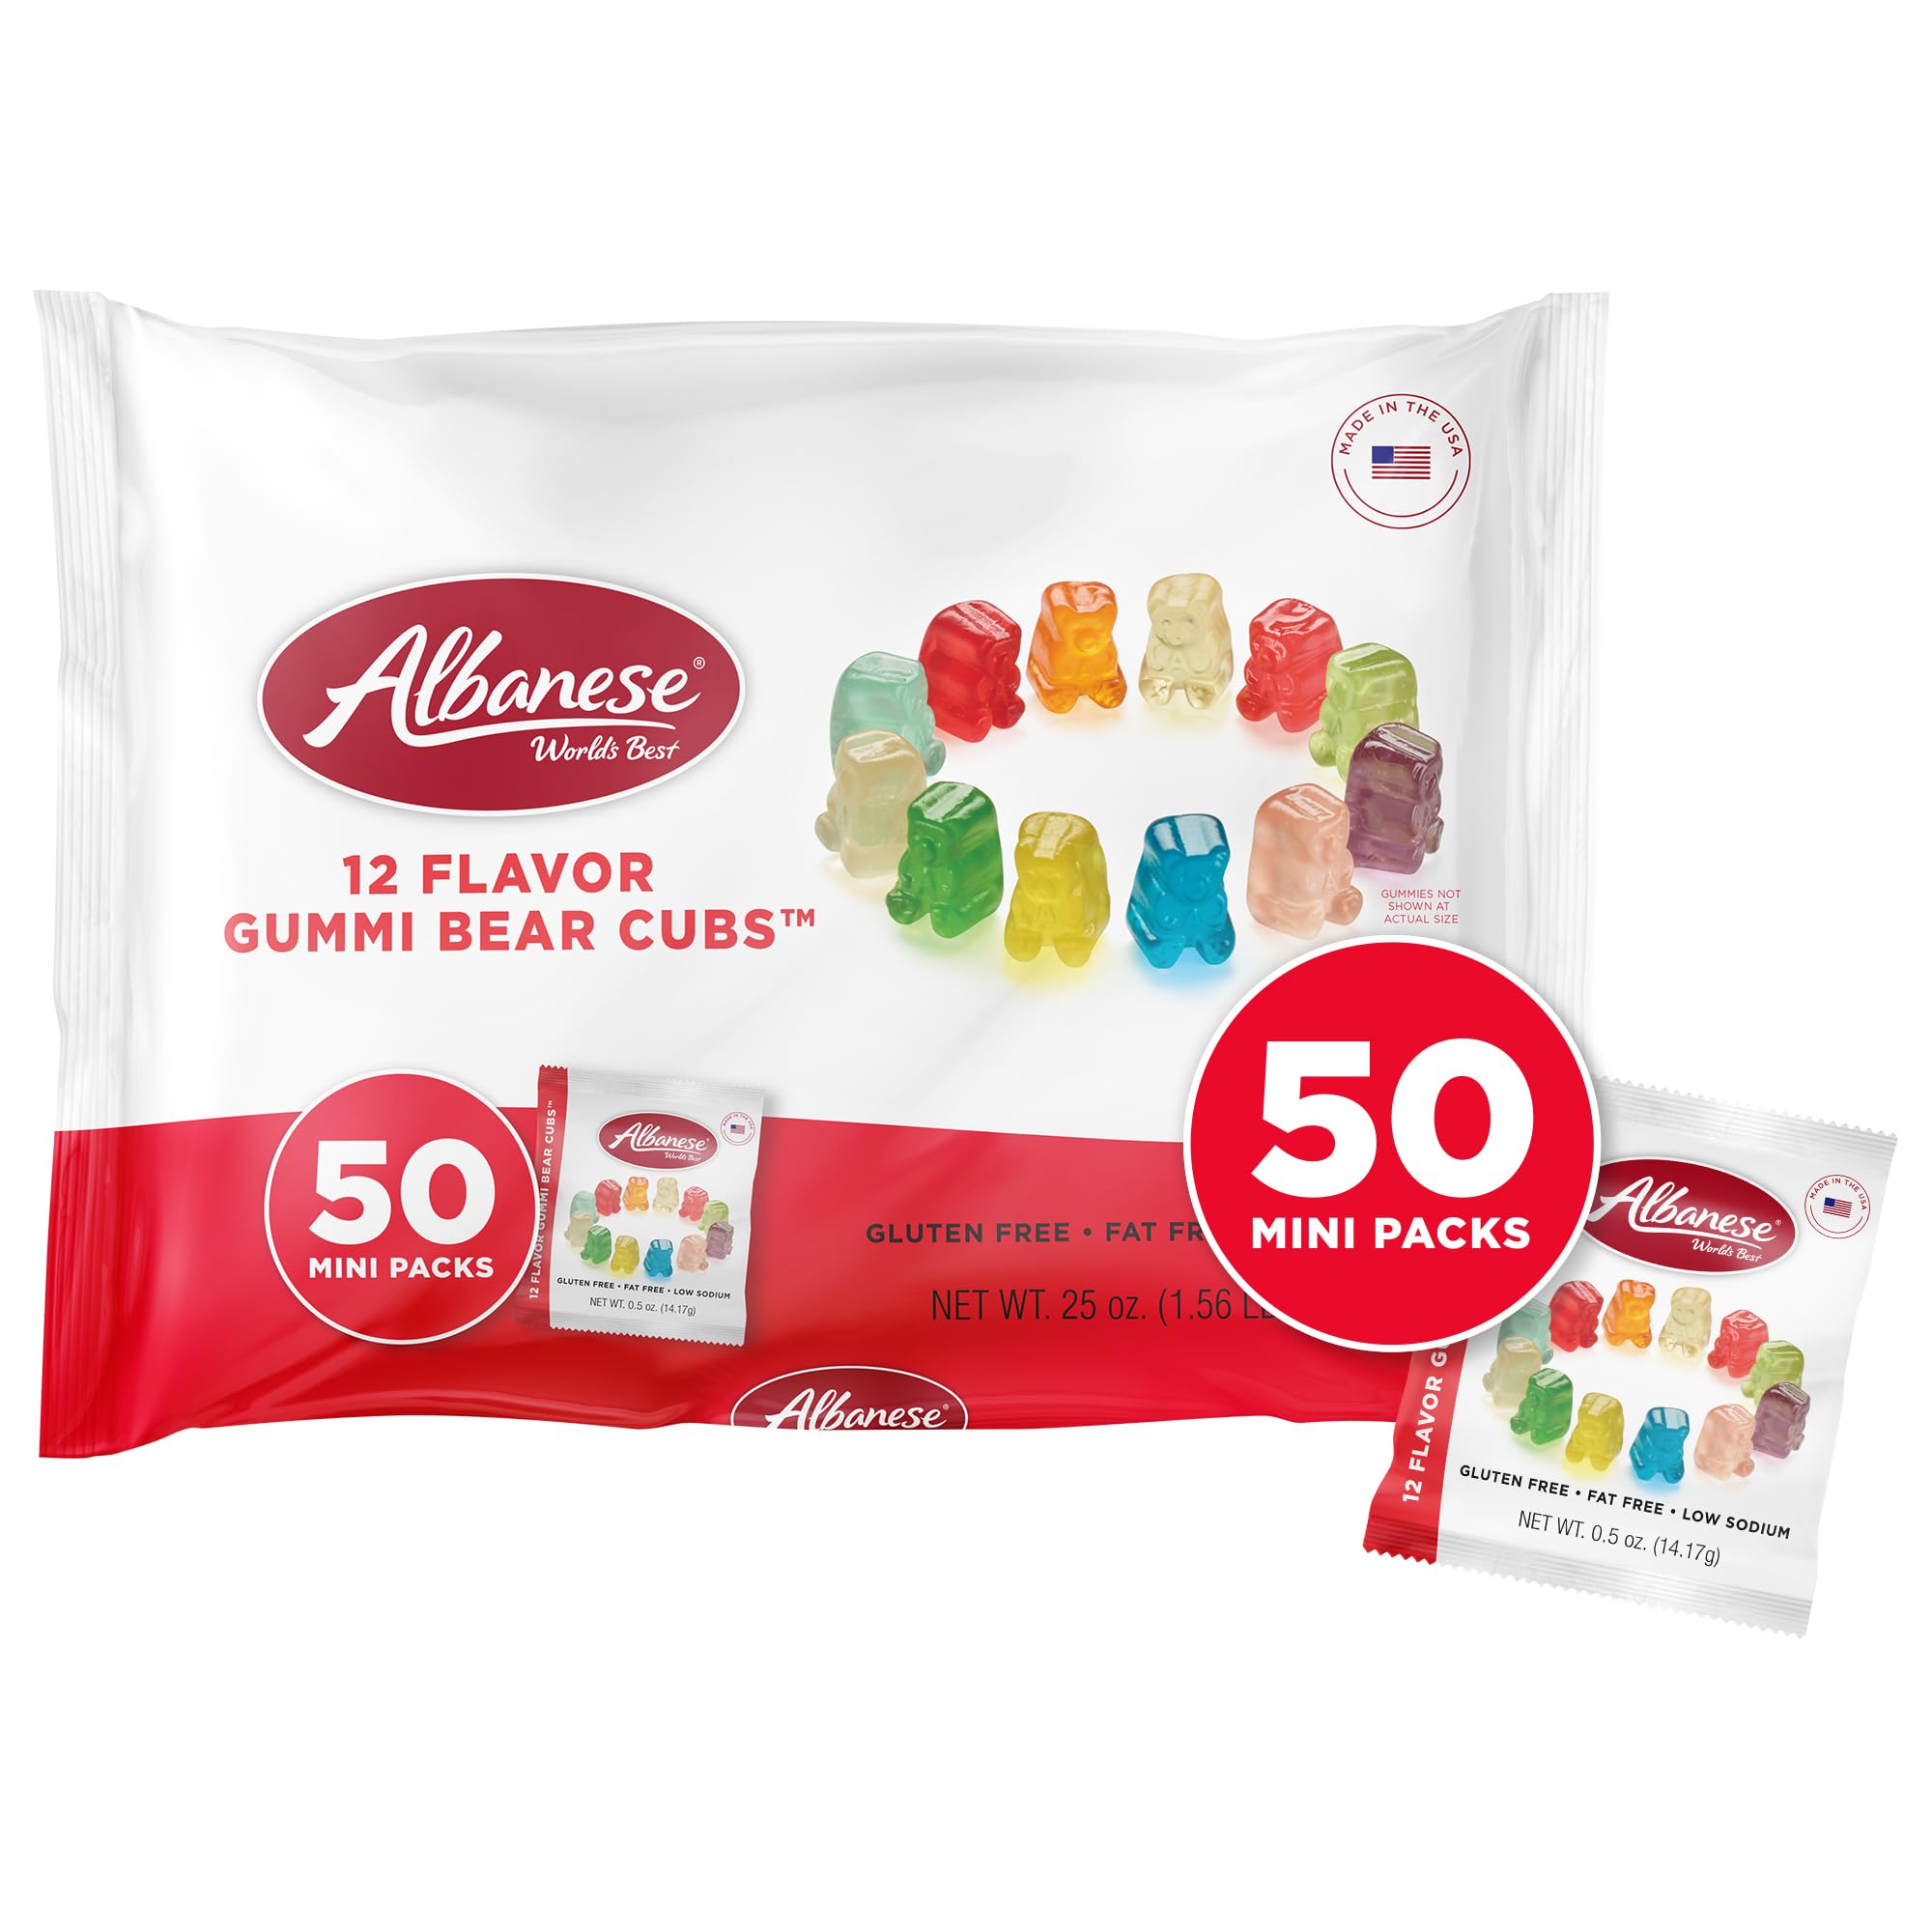 Albanese World's Best Gummi Snack Packs, 12 Flavor Gummi Bear Cubs, 50 mini packs of Candy